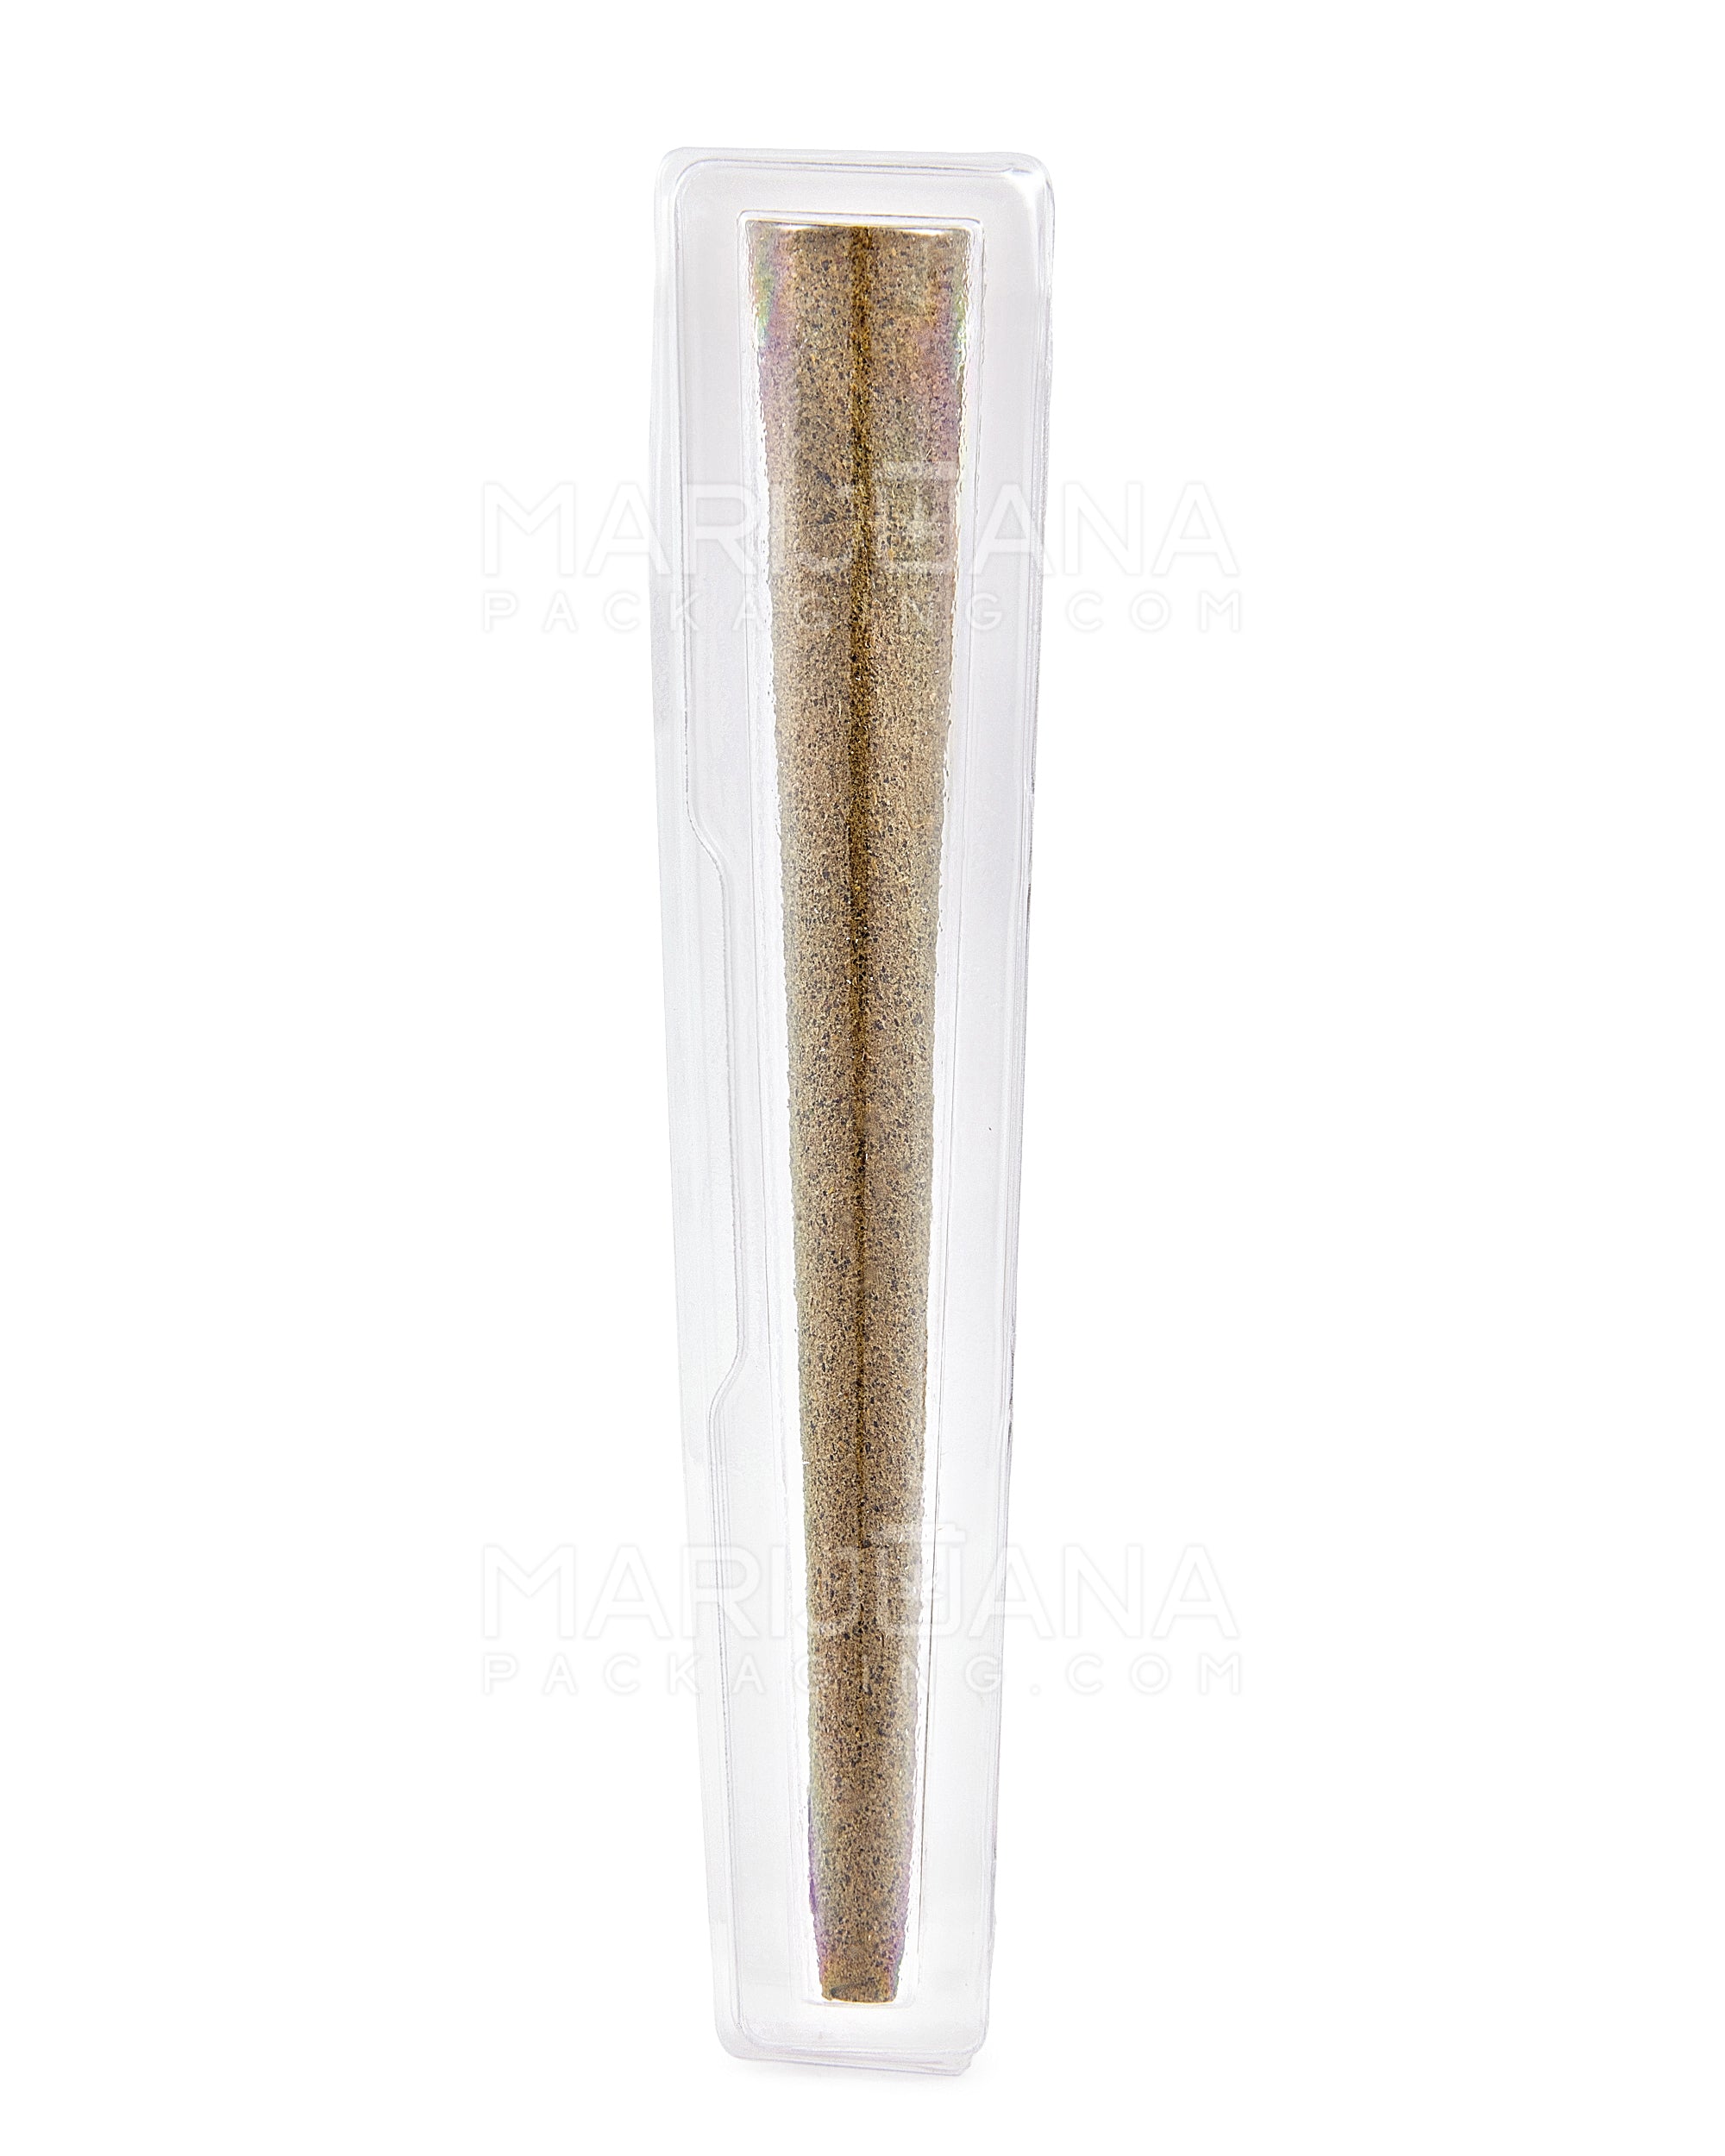 KUSH | 'Retail Display' Ultra Herbal Hemp Conical Wraps | 157mm - Mixed Grape - 15 Count - 5